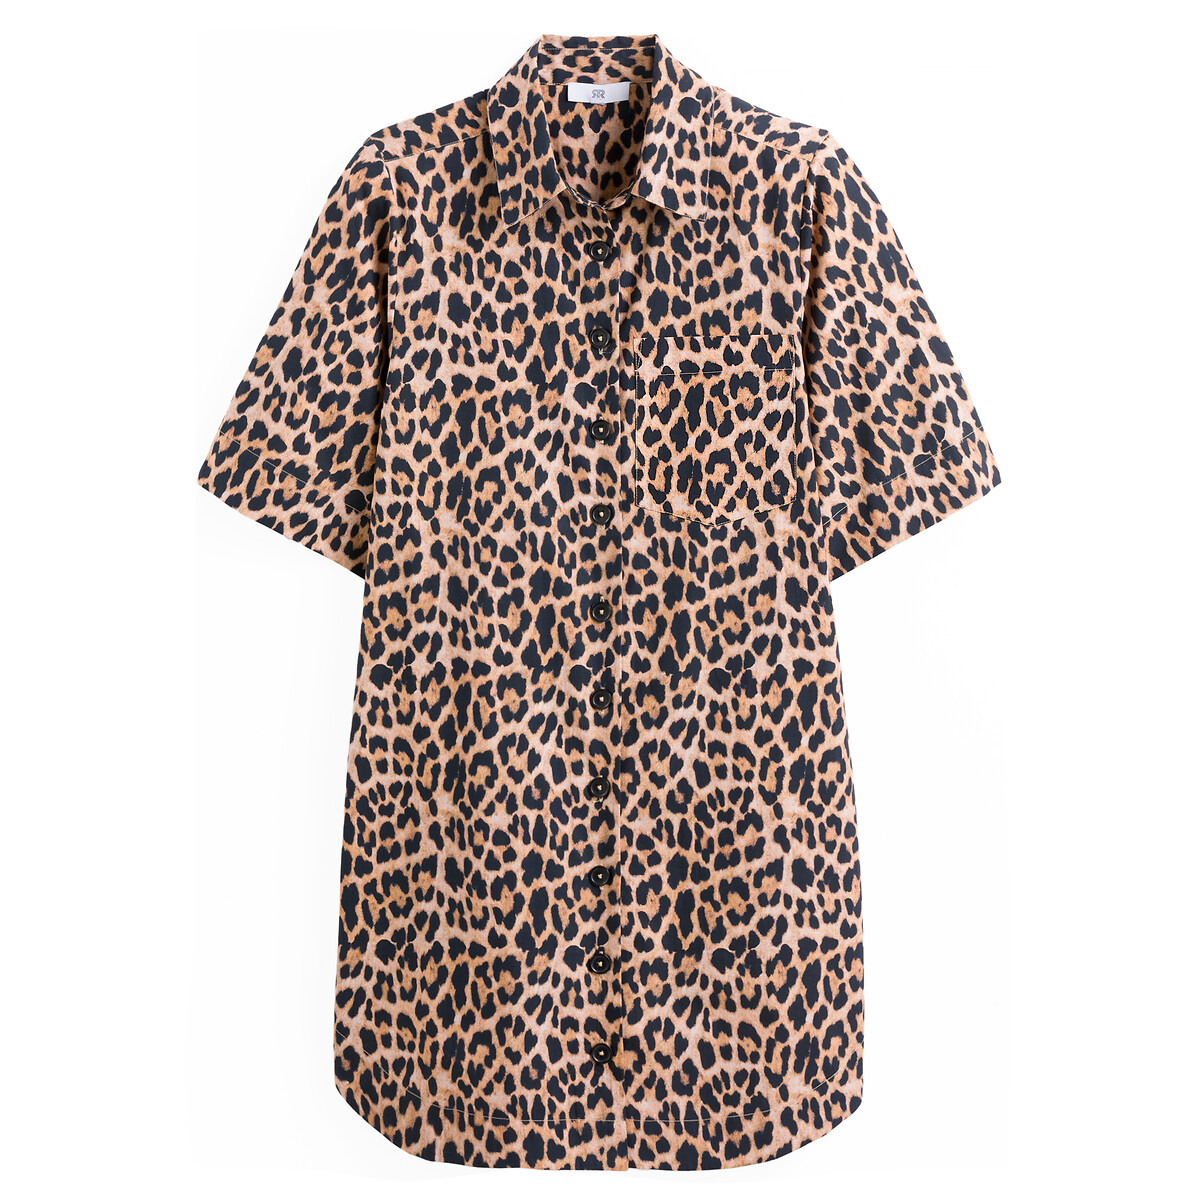 Платье-рубашка Короткое короткие рукава с леопардовым принтом 52 другие LaRedoute, размер 52 - фото 5